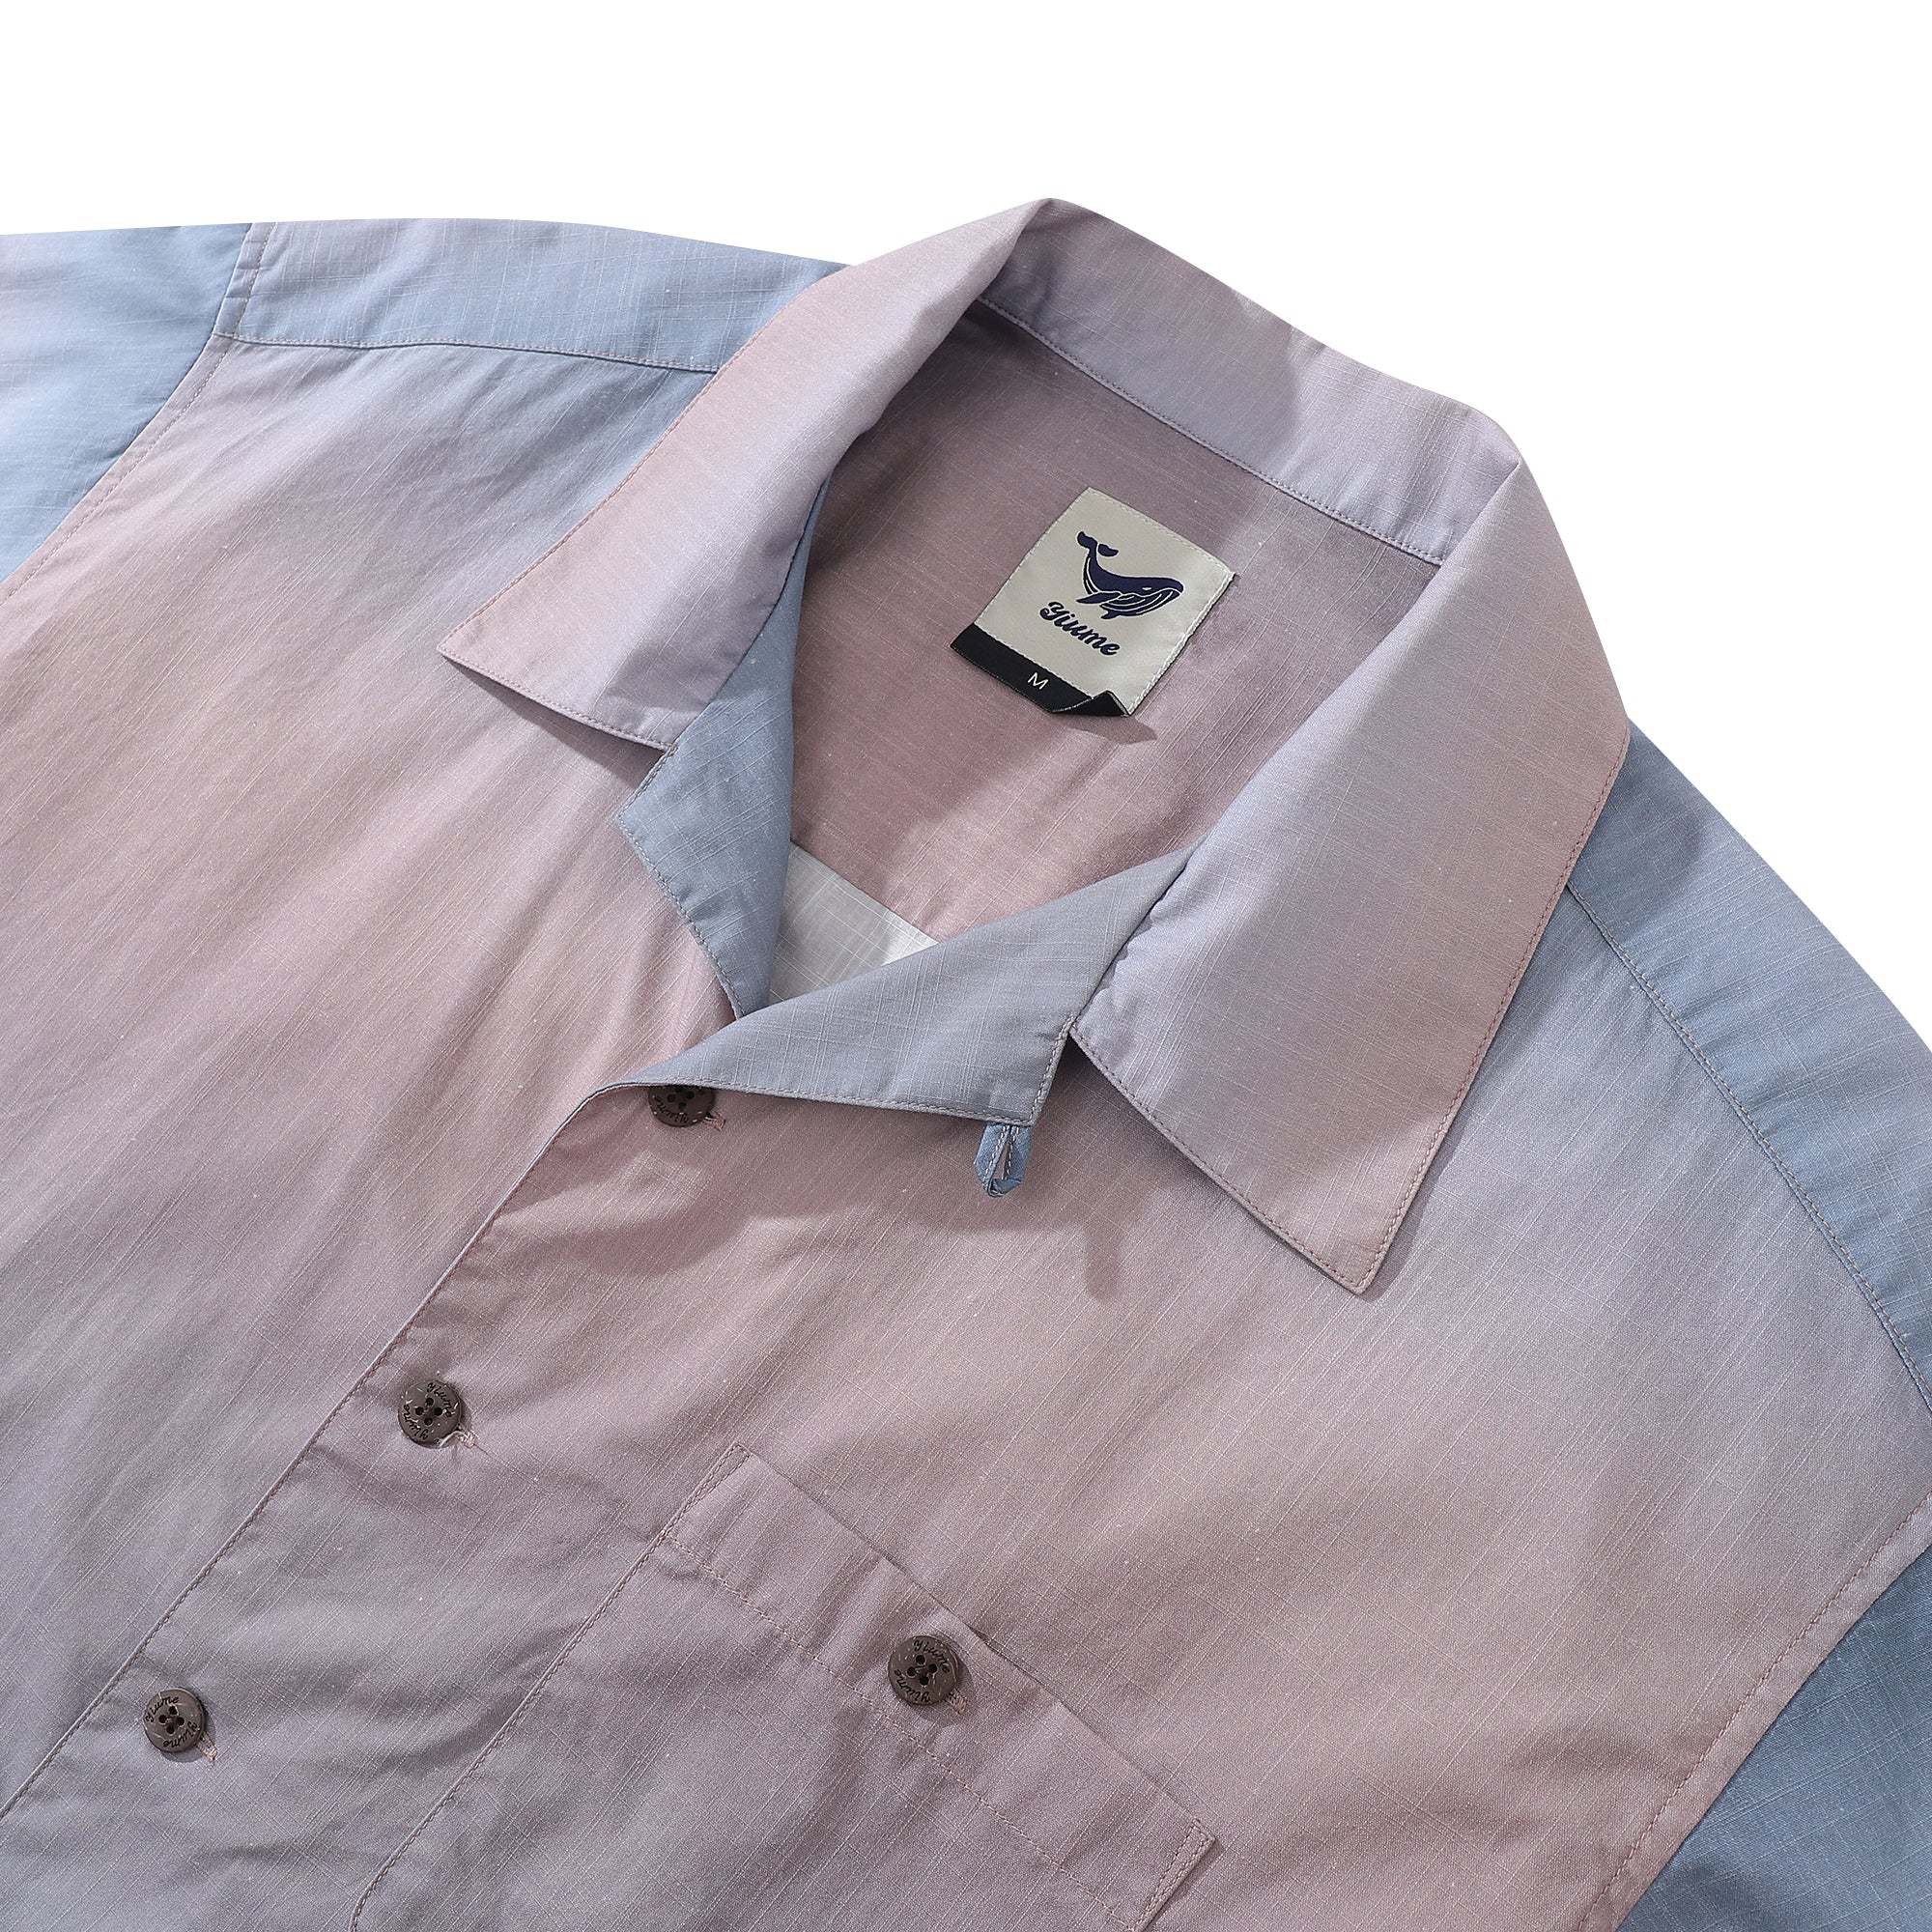 1950s Vintage Hawaiian Shirt For Men Navigation Shirt Camp Collar 100% Cotton